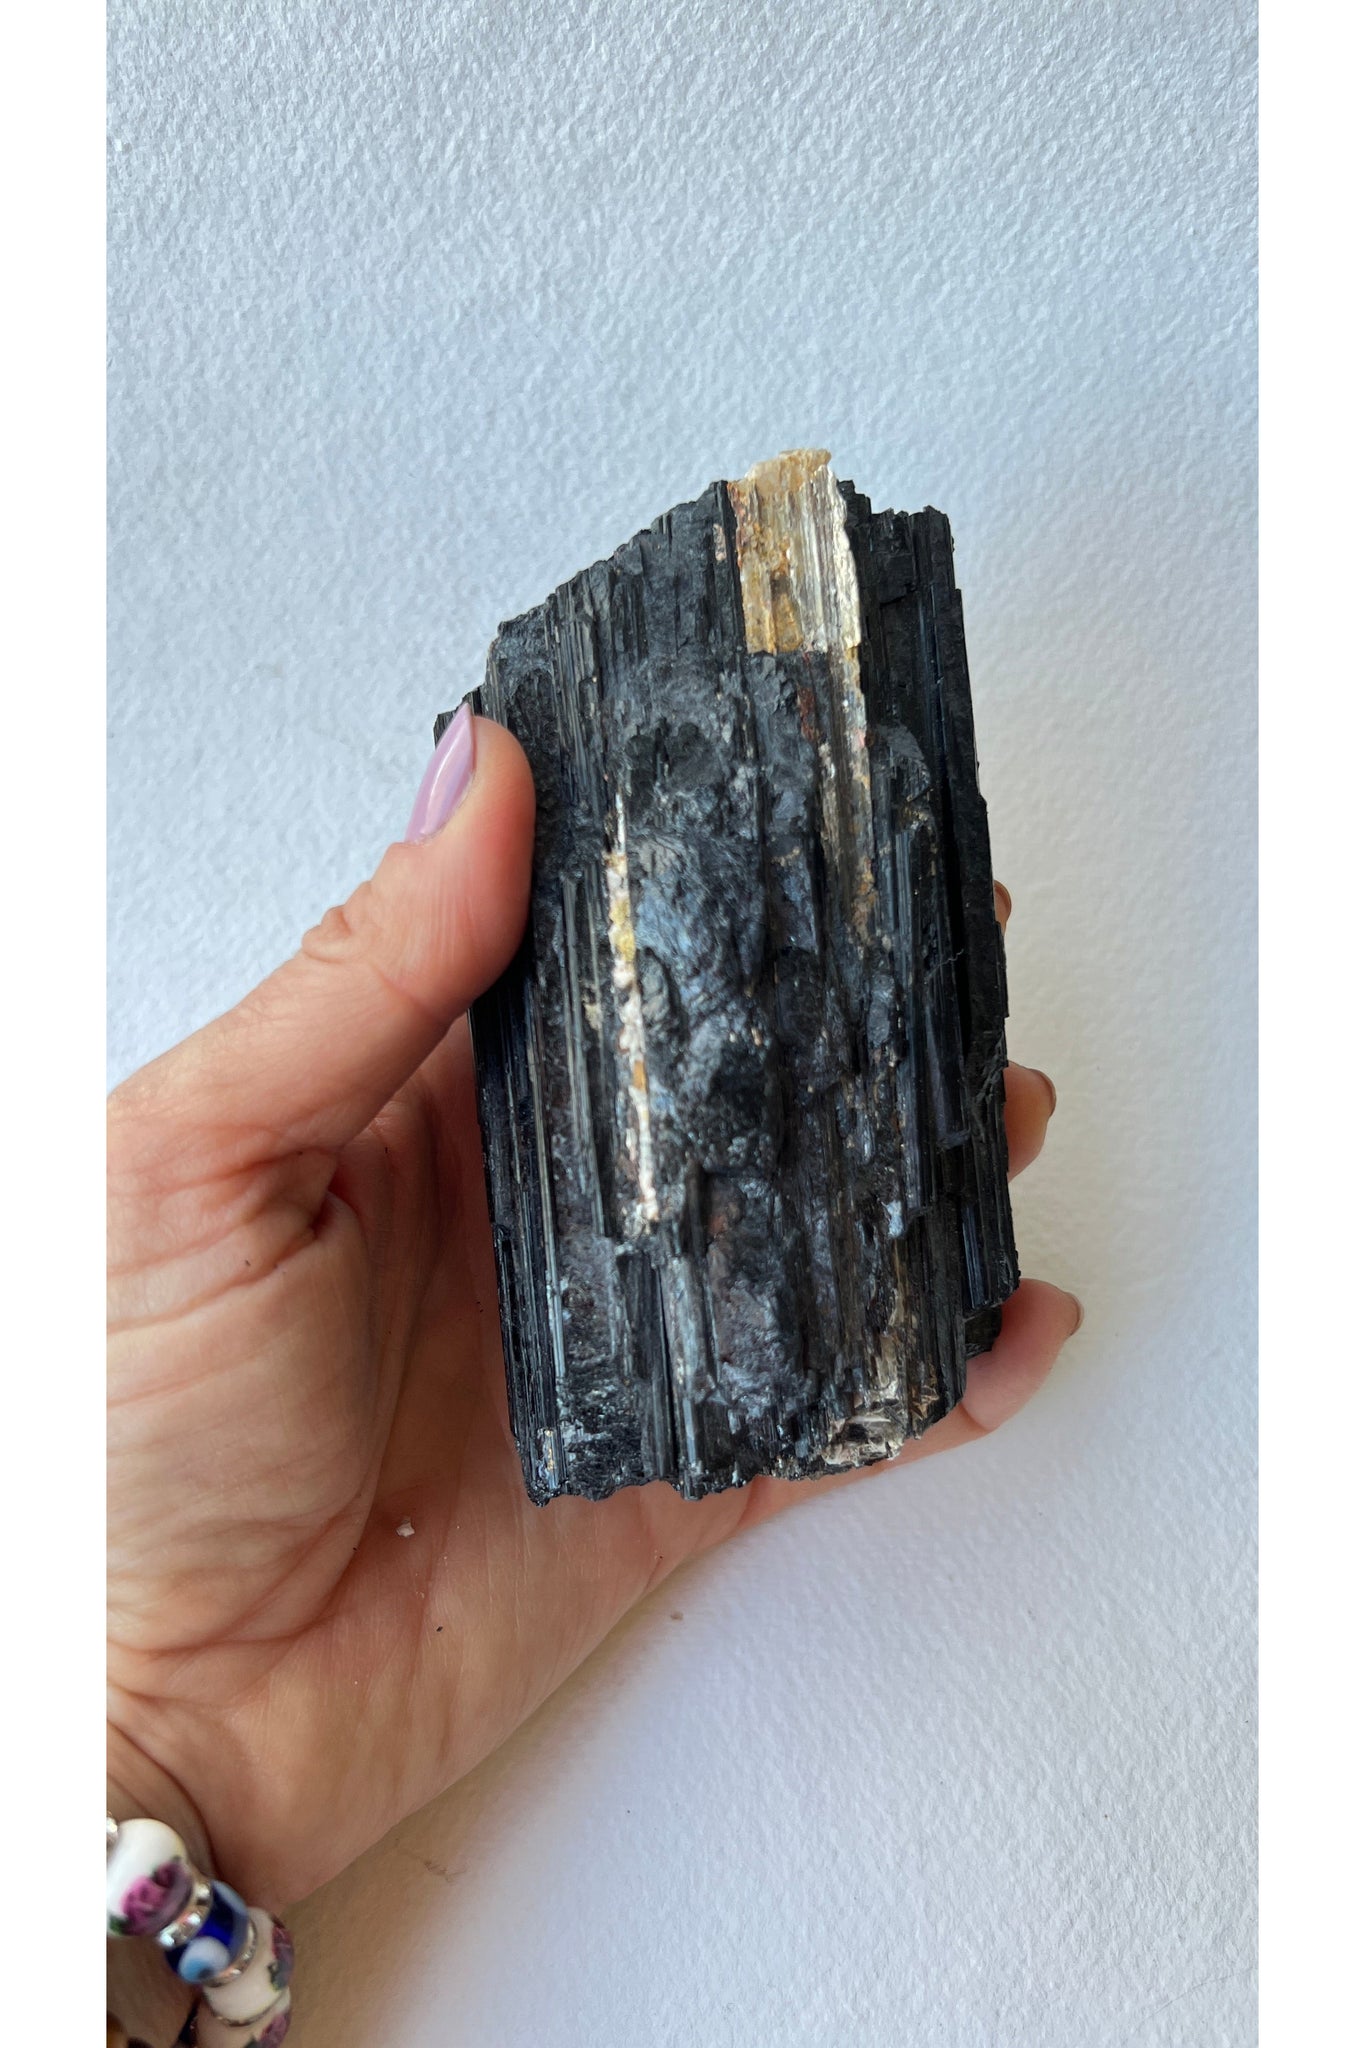 Black Tourmaline with Lithium | Unique Specimen Majestic Hudson Lifestyle Experiences Crystals